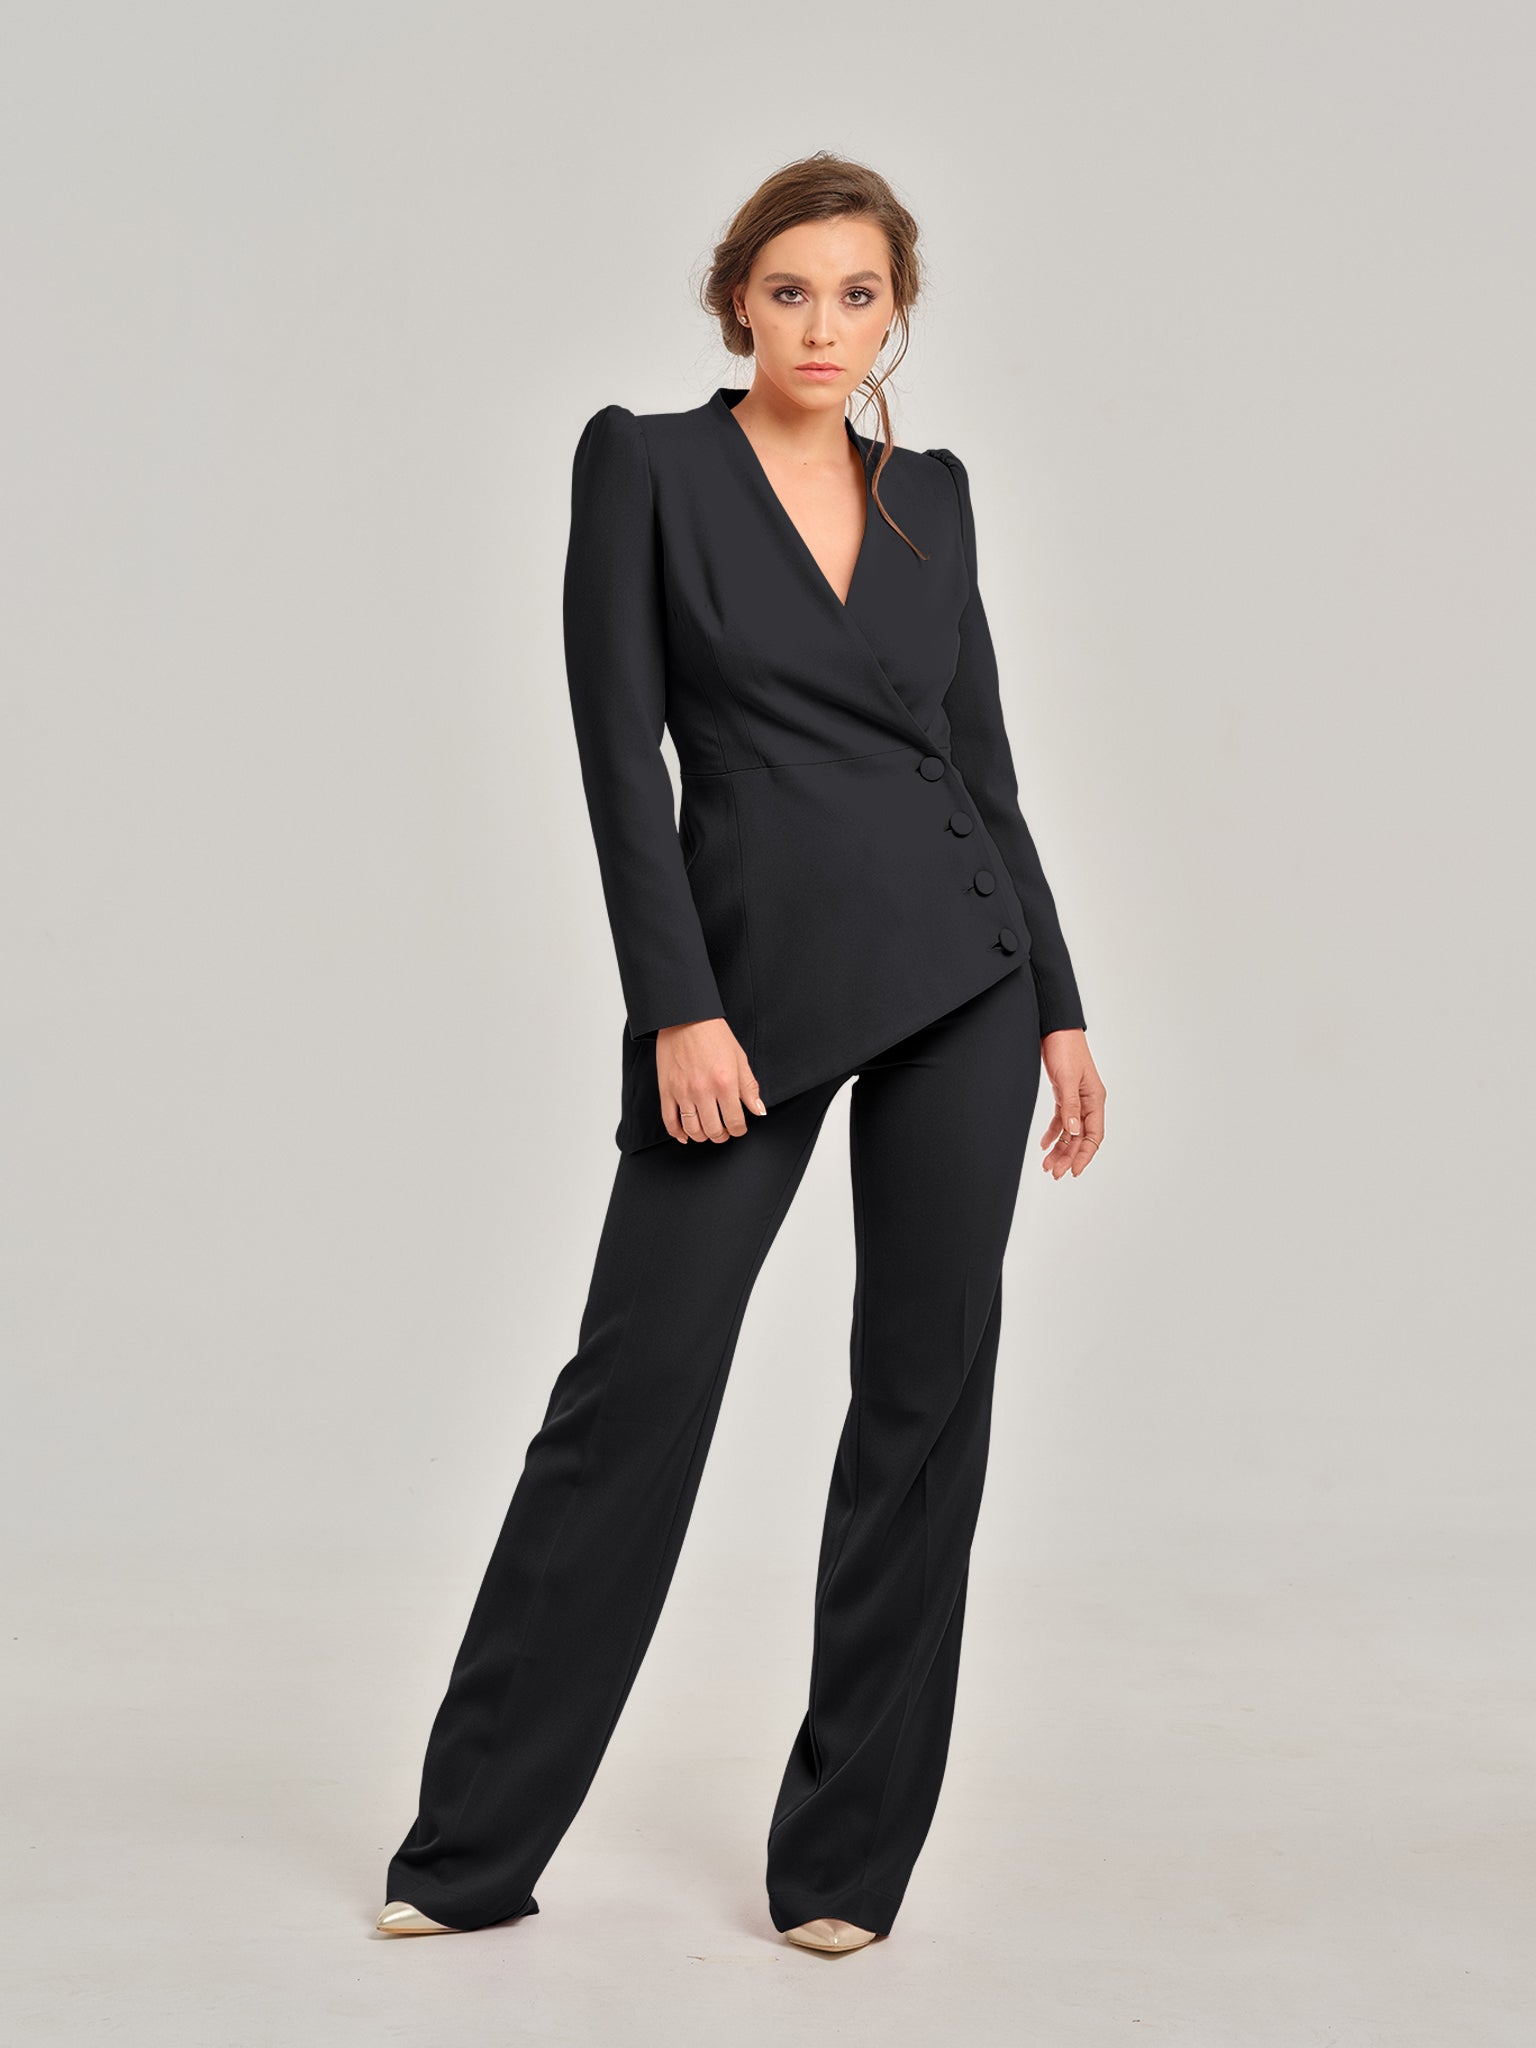 Magnetic Power Timeless Asymmetric Blazer by Tia Dorraine Women's Luxury Fashion Designer Clothing Brand